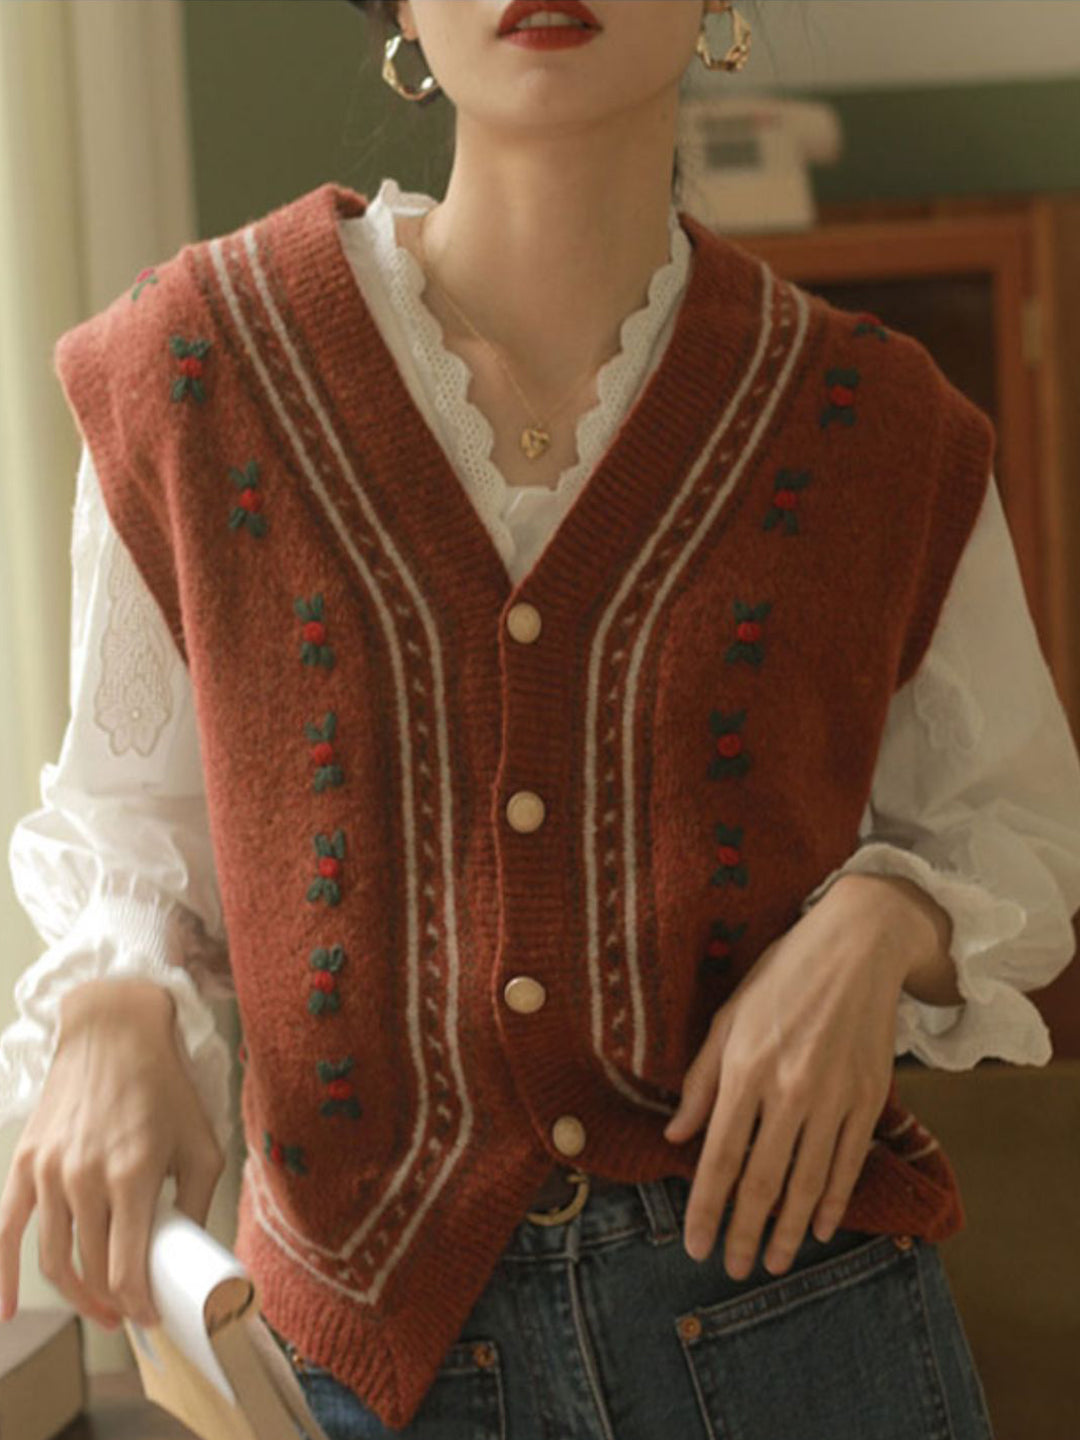 Alani Vintage Embroidery V-Neck Knitted Vest